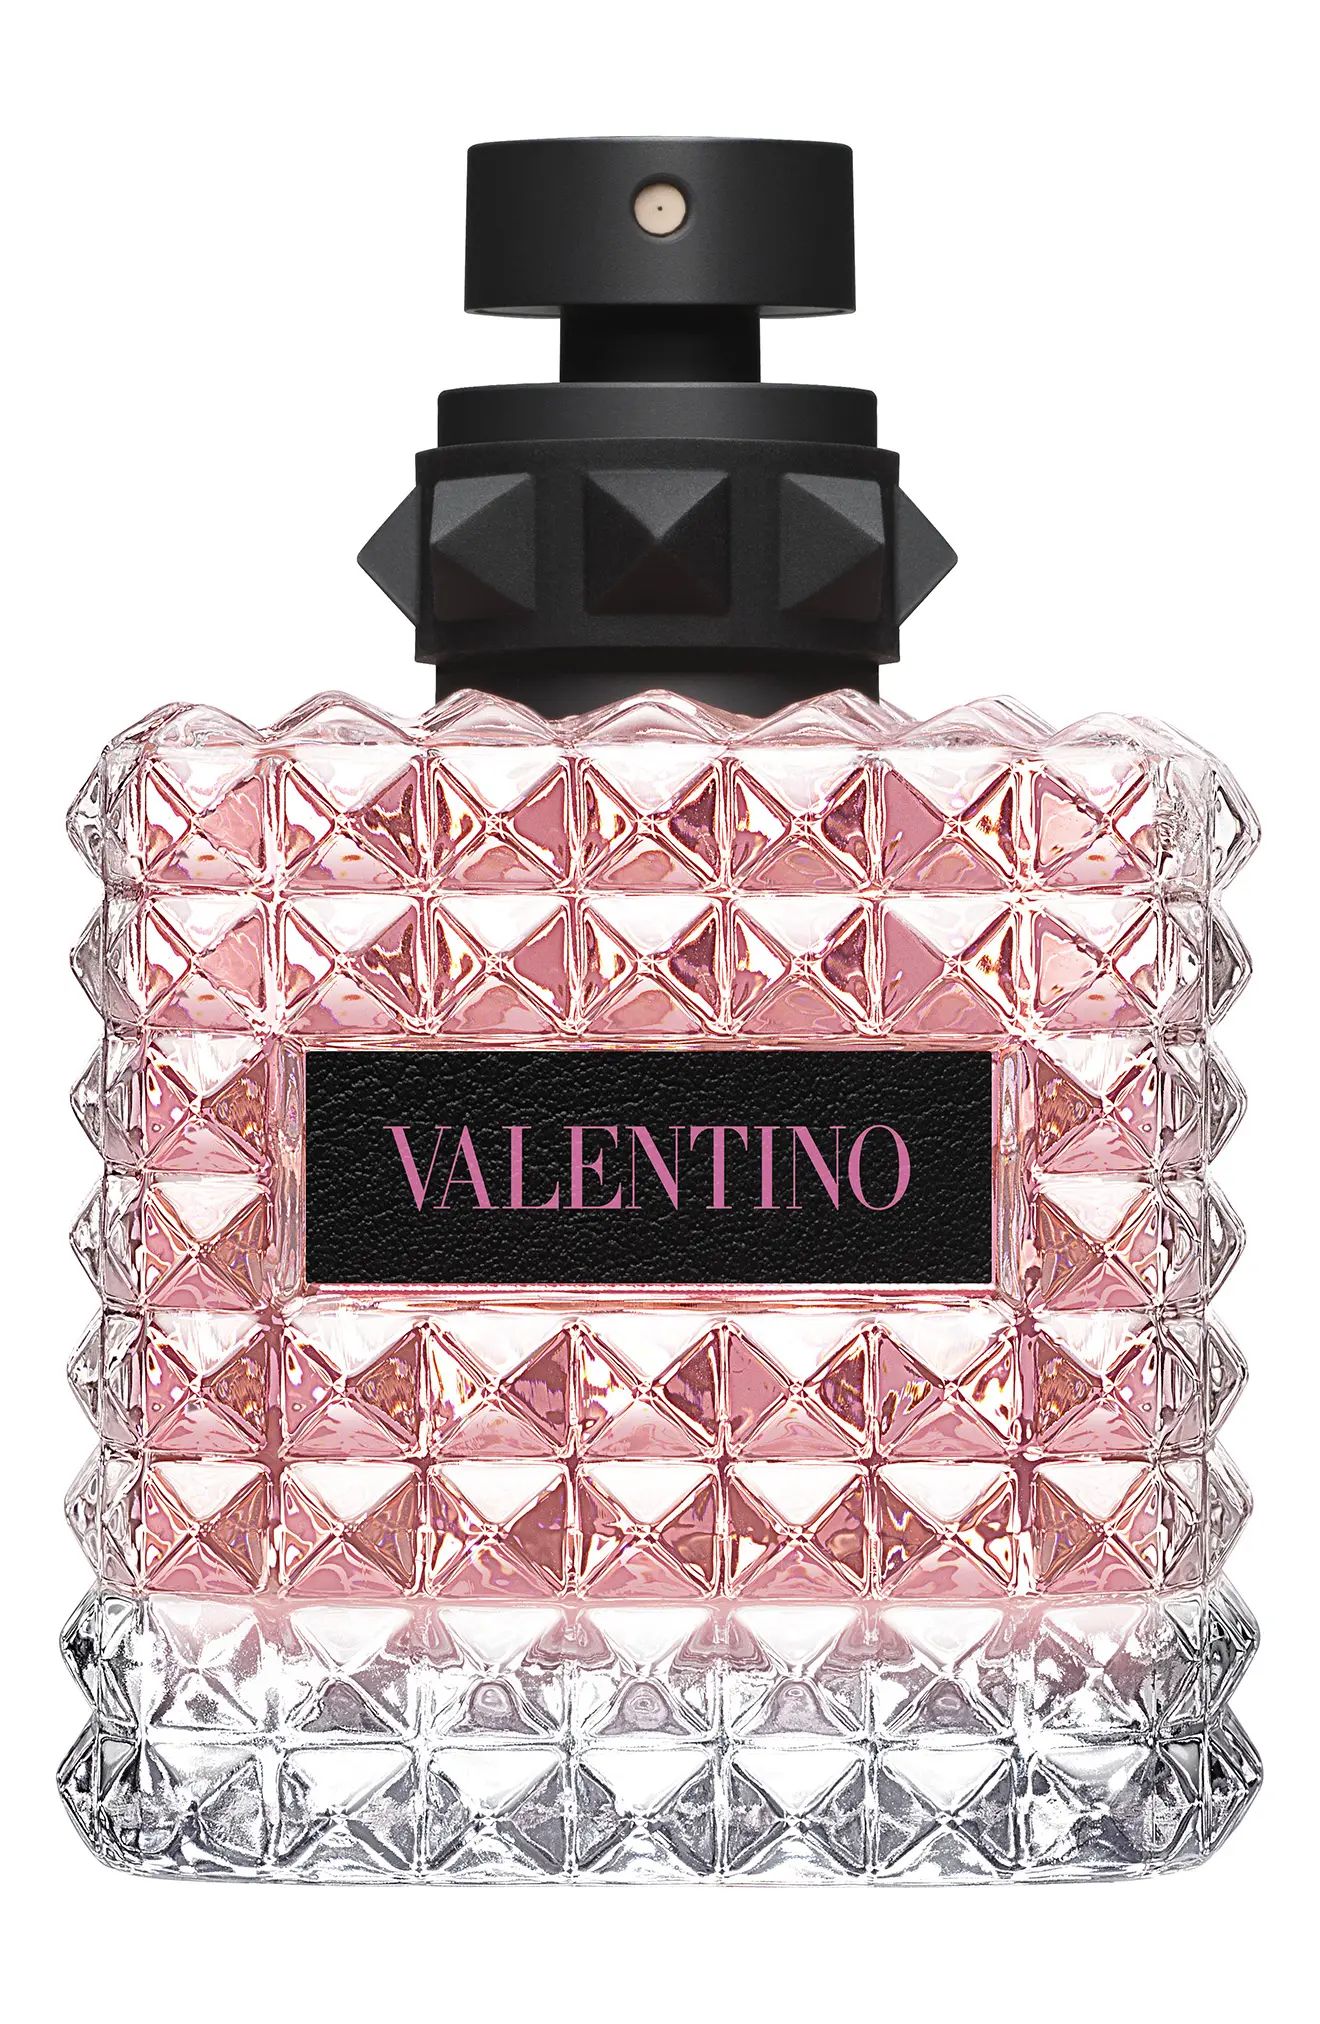 Valentino Donna Born in Roma Eau de Parfum Fragrance at Nordstrom, Size 1 Oz | Nordstrom